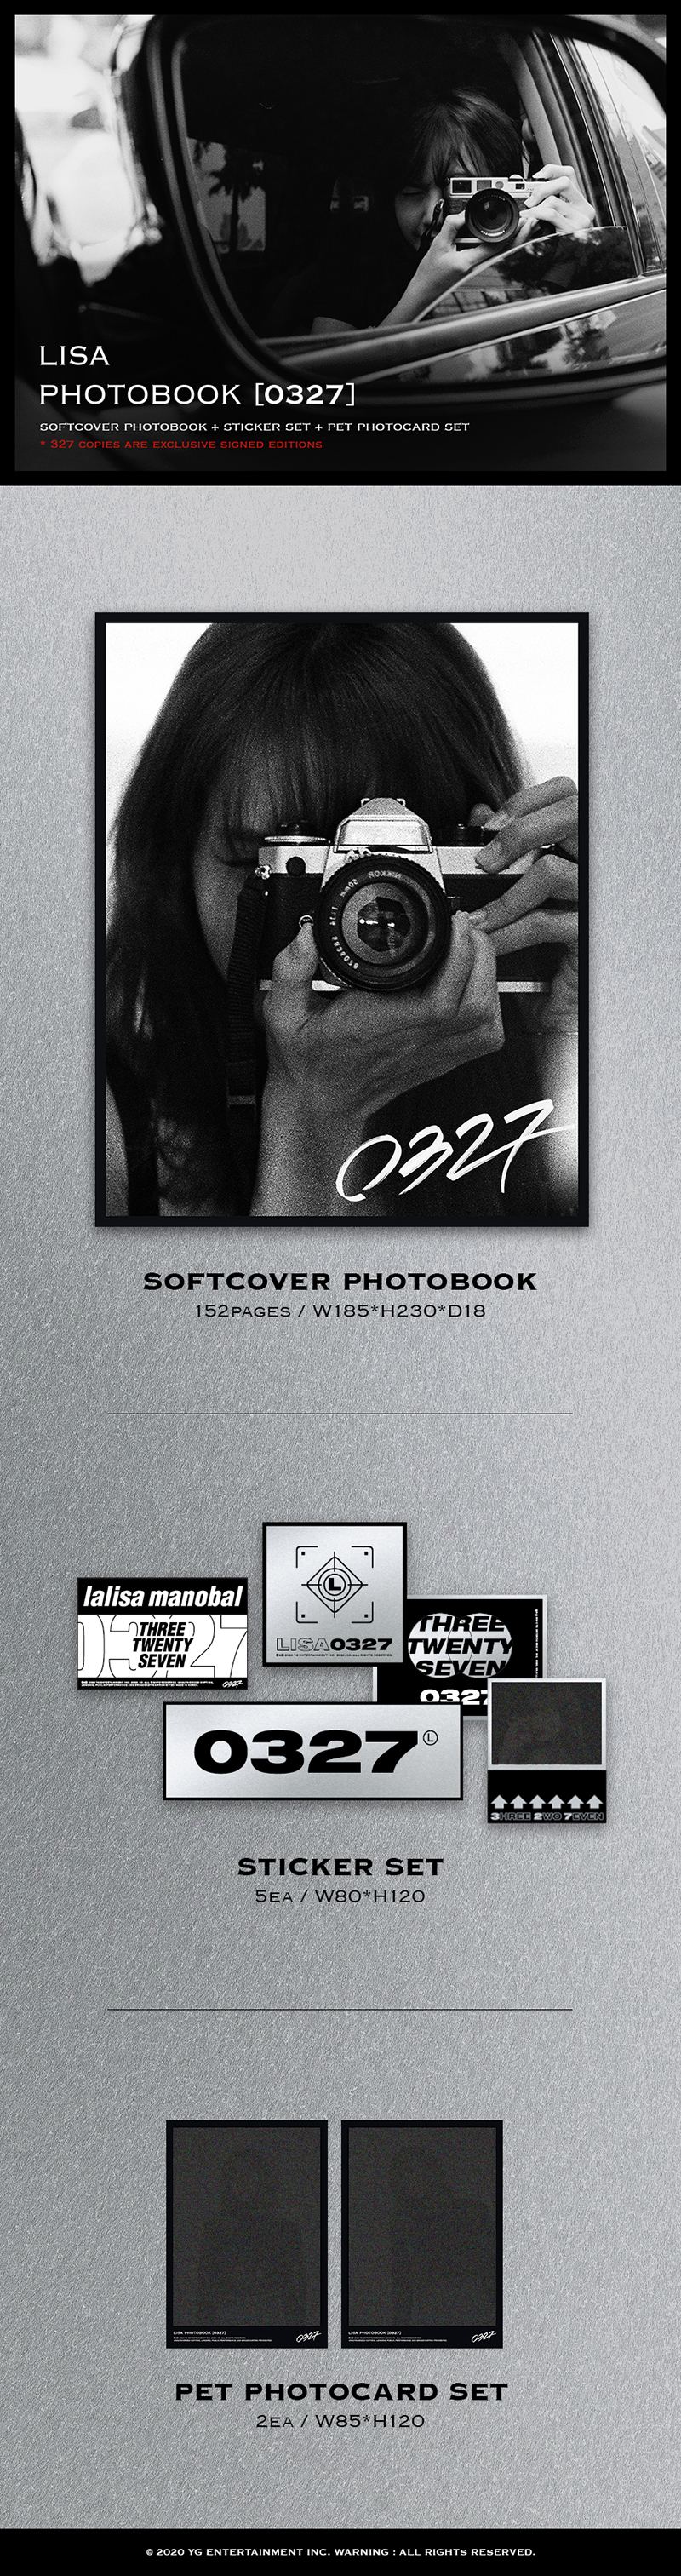 jp.ktown4u.com : [Photobook] BLACKPINK : LISA - LISA PHOTOBOOK ...